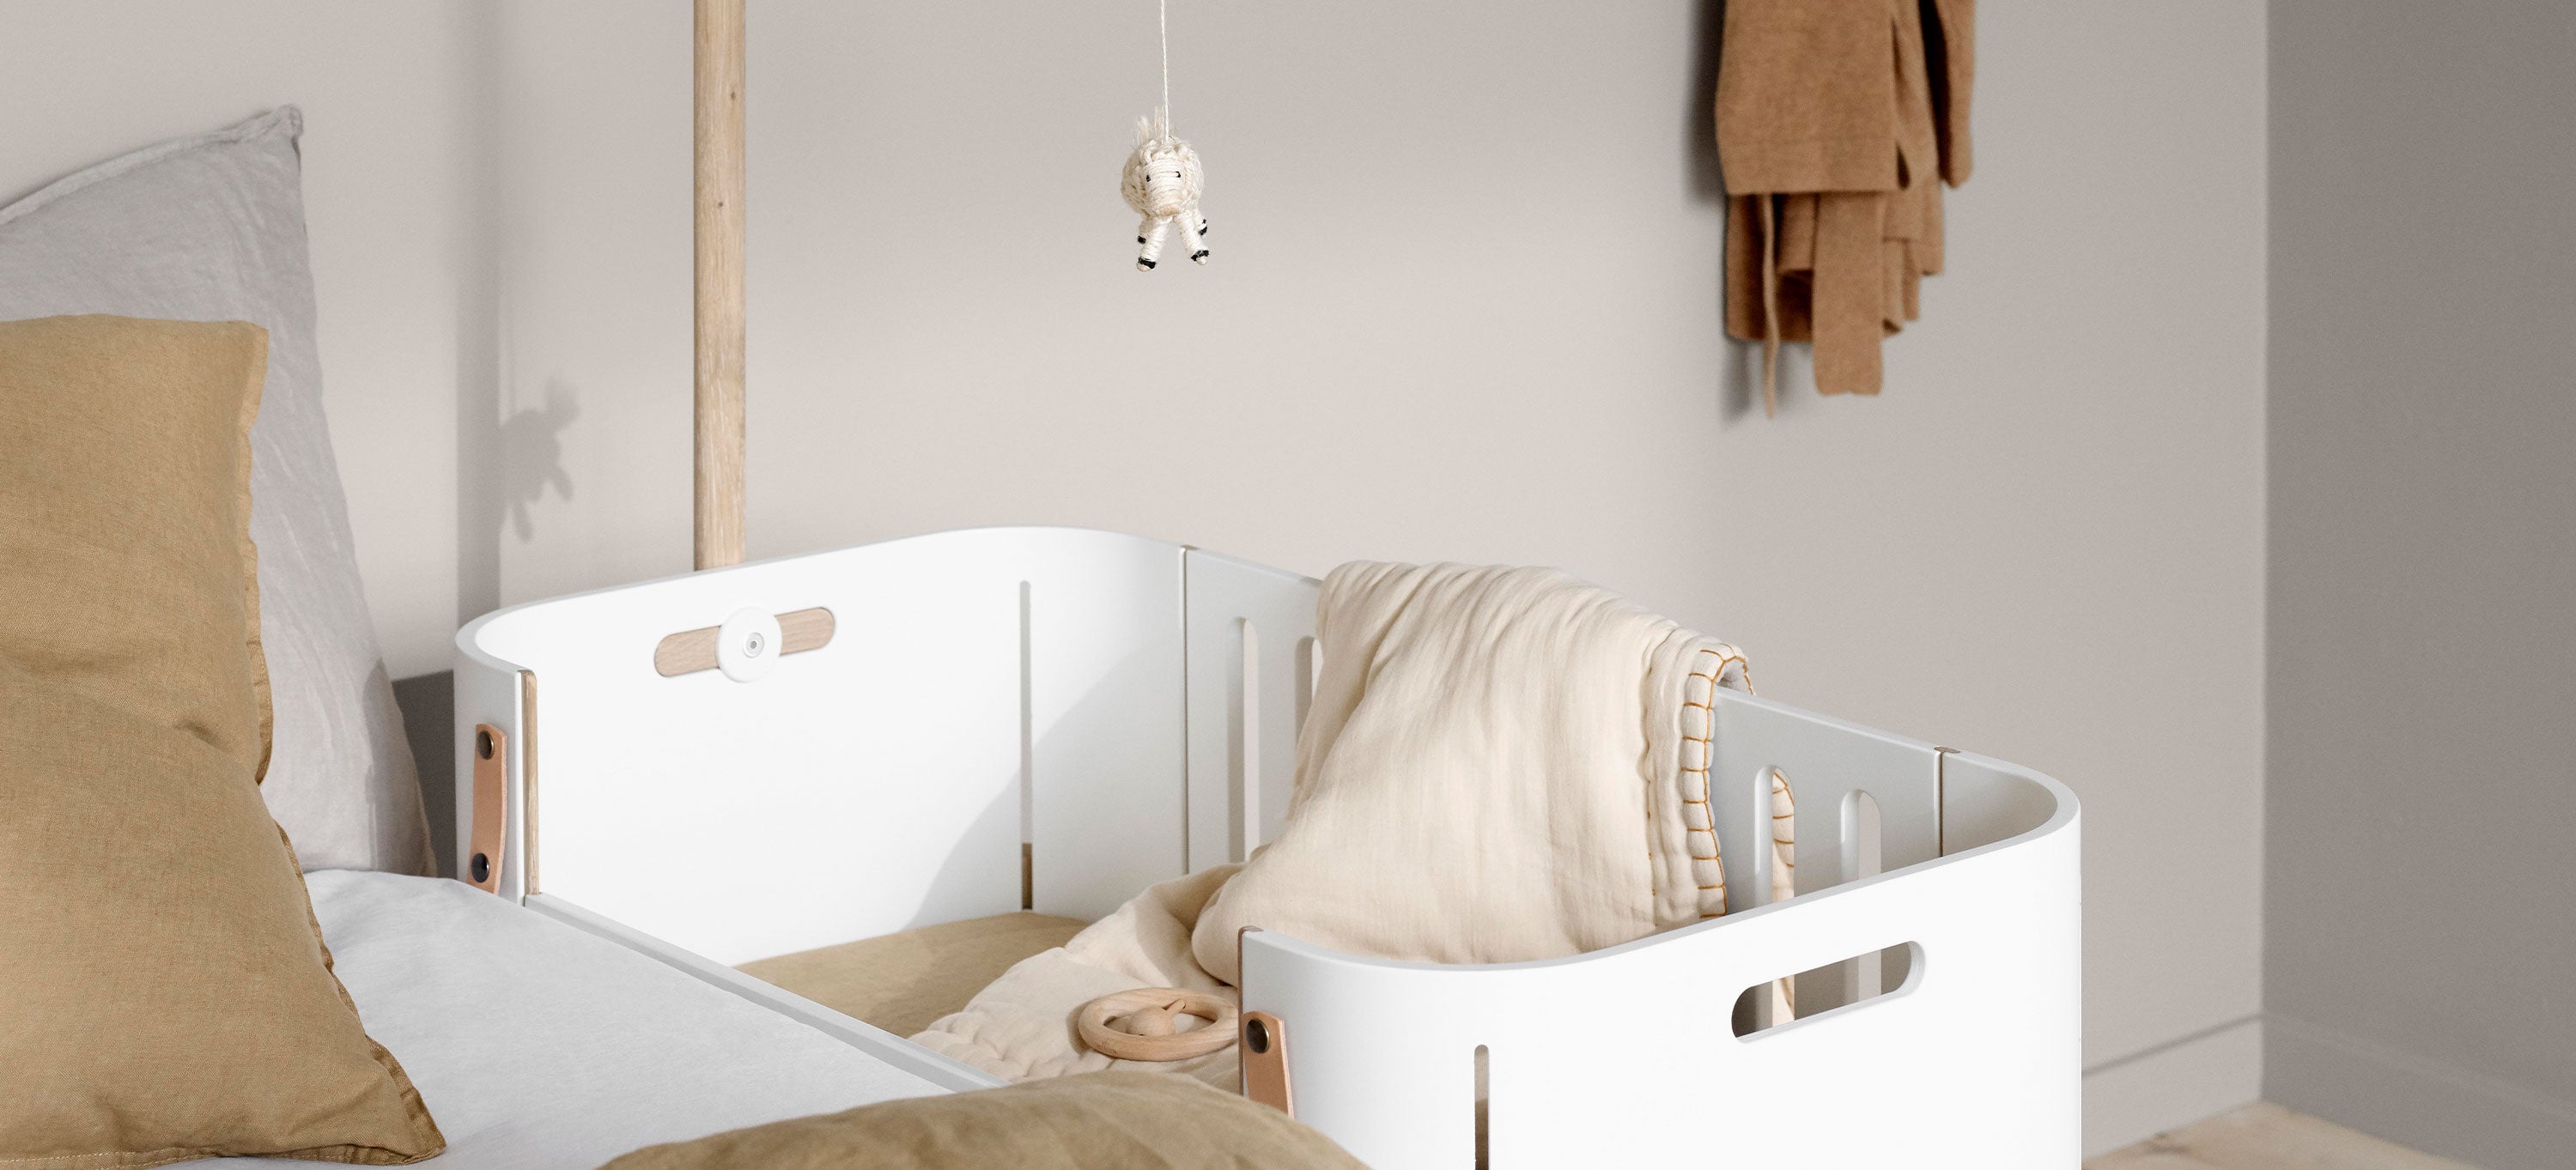 Wood Baby - Oliver Furniture